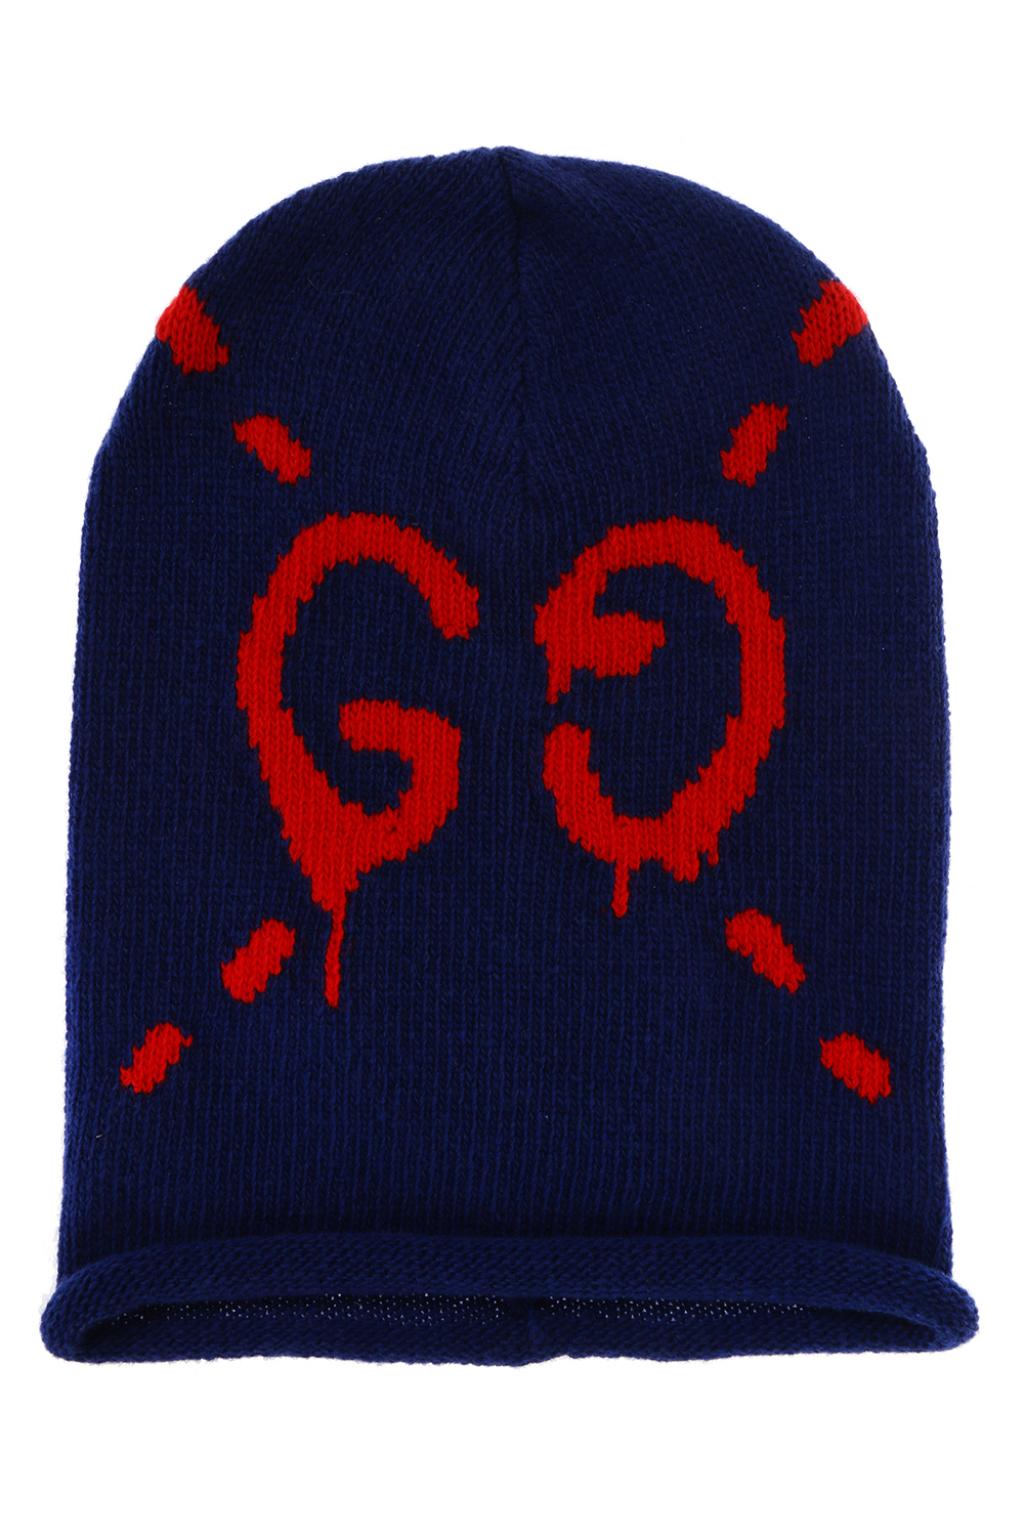 gucci ghost hat